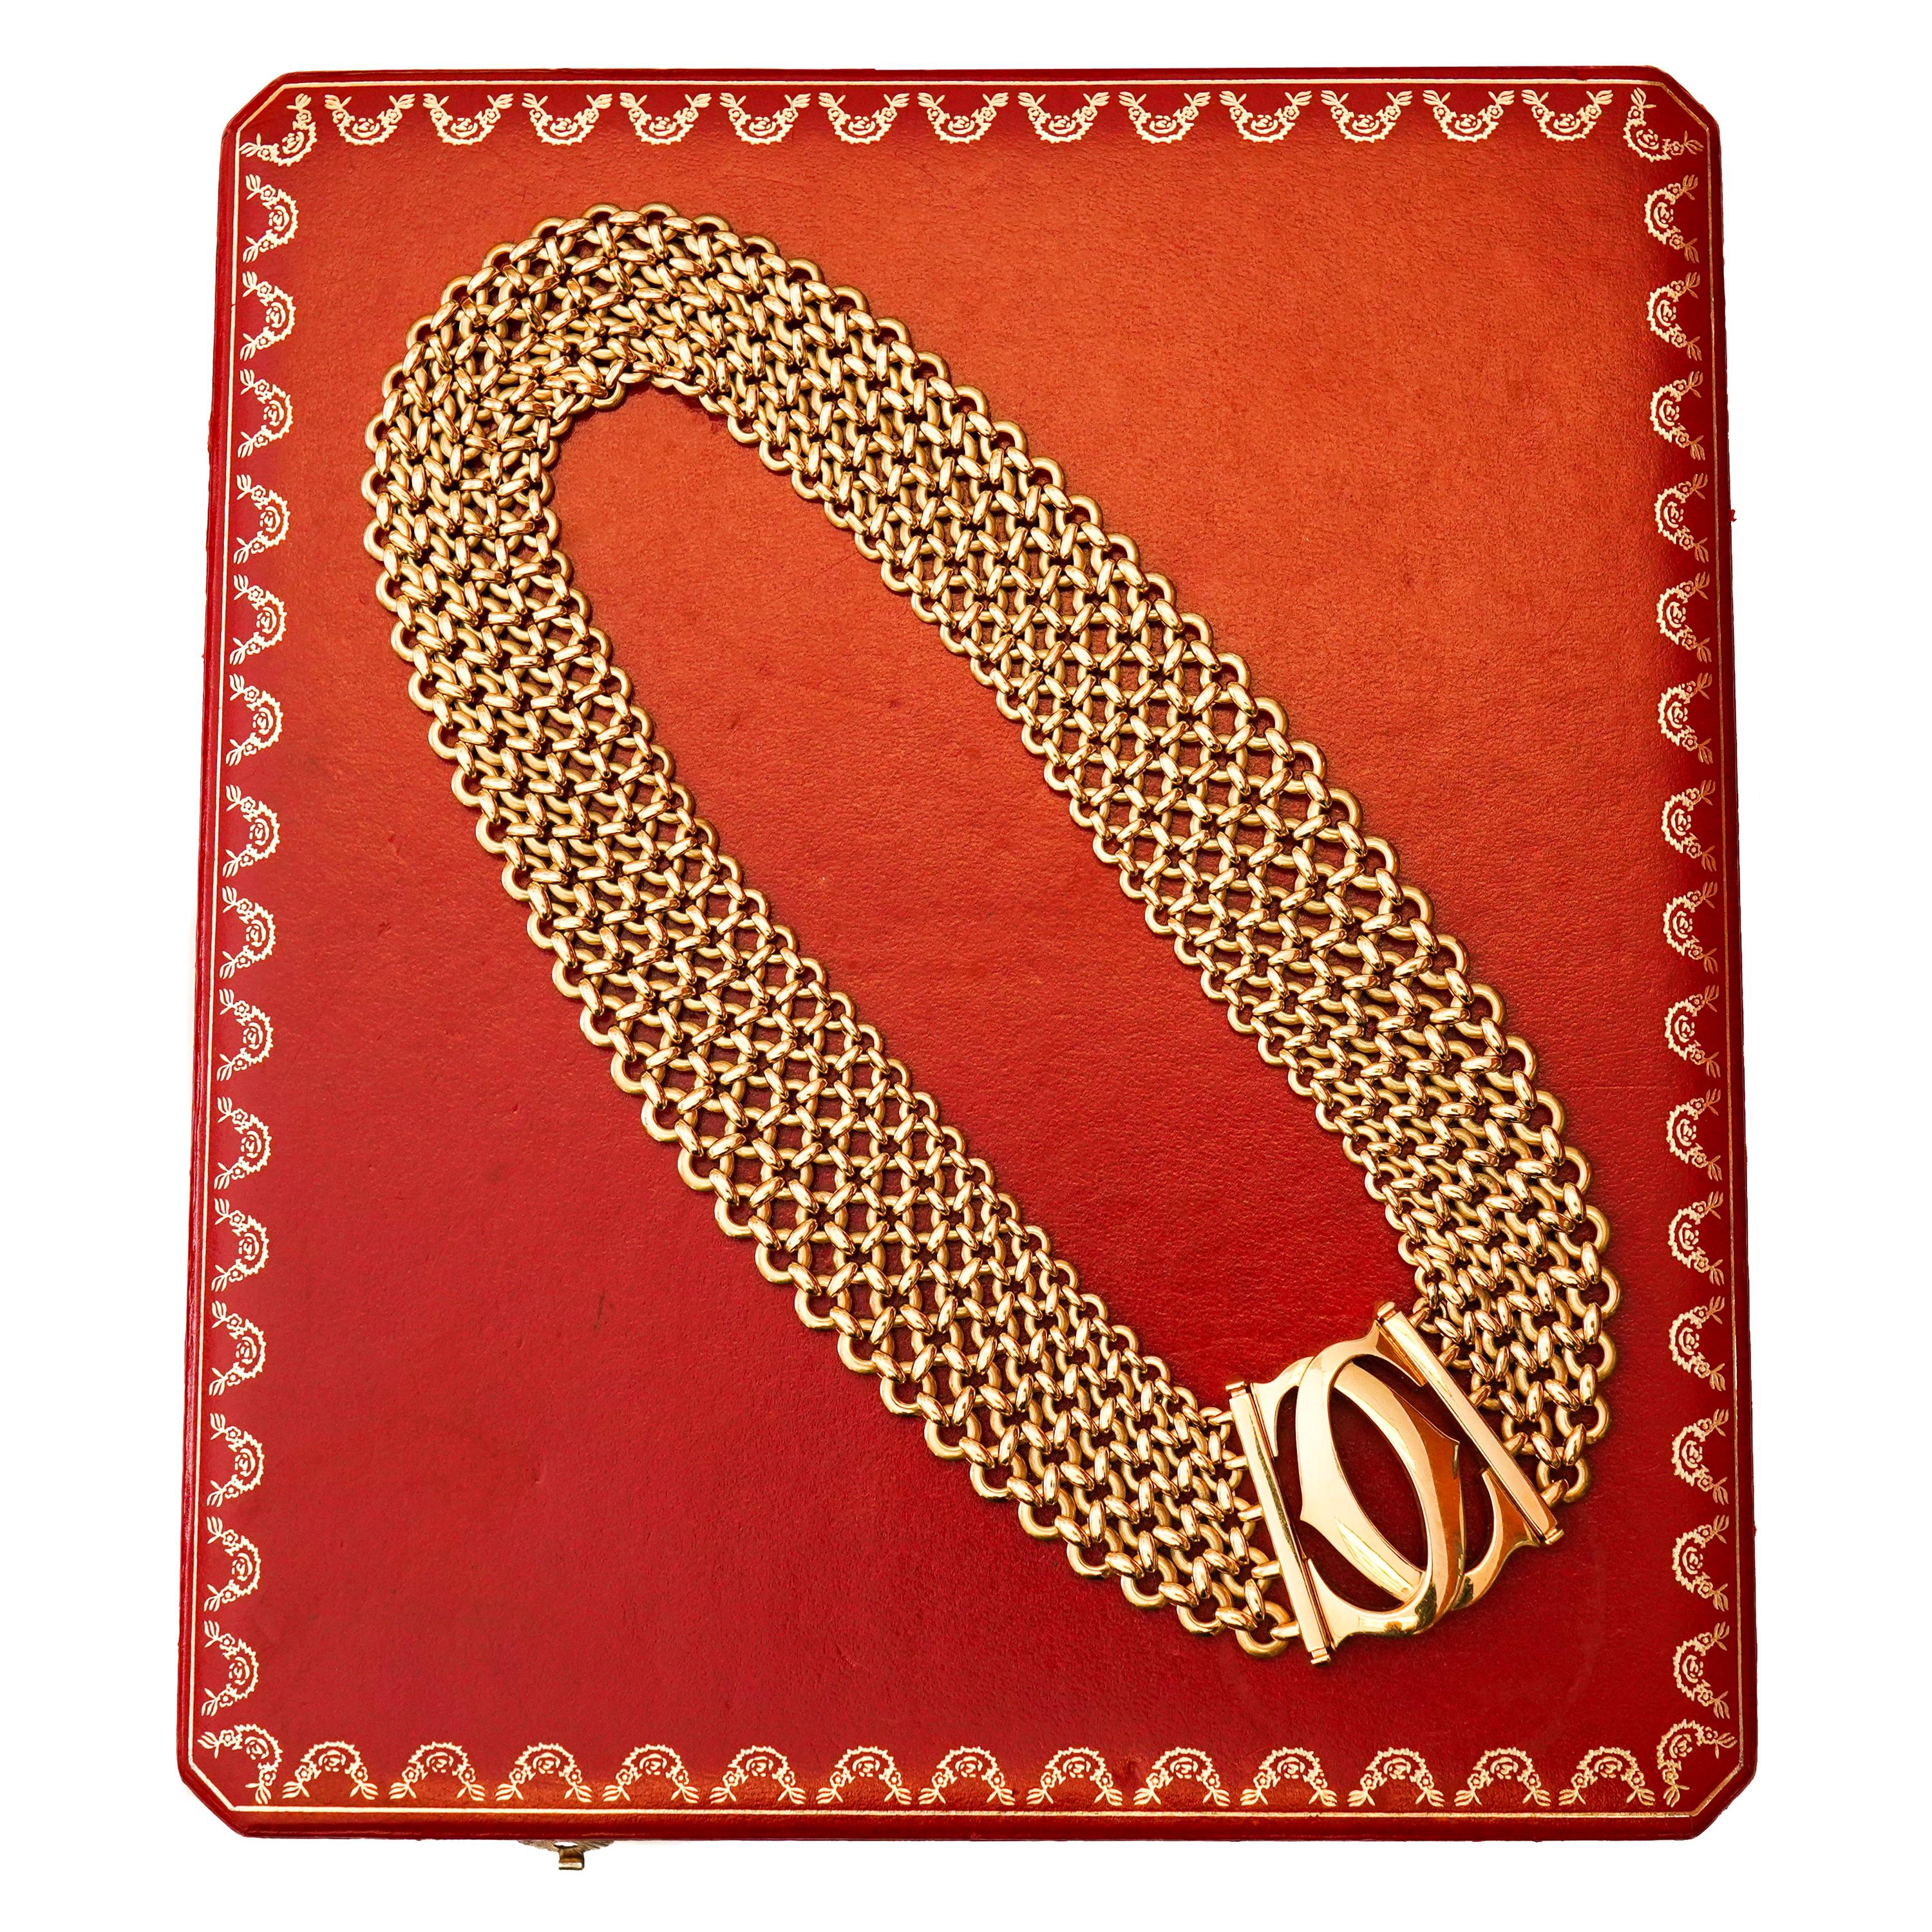 Cartier Necklace Penelope "C" Motif Yellow Gold 5 Row